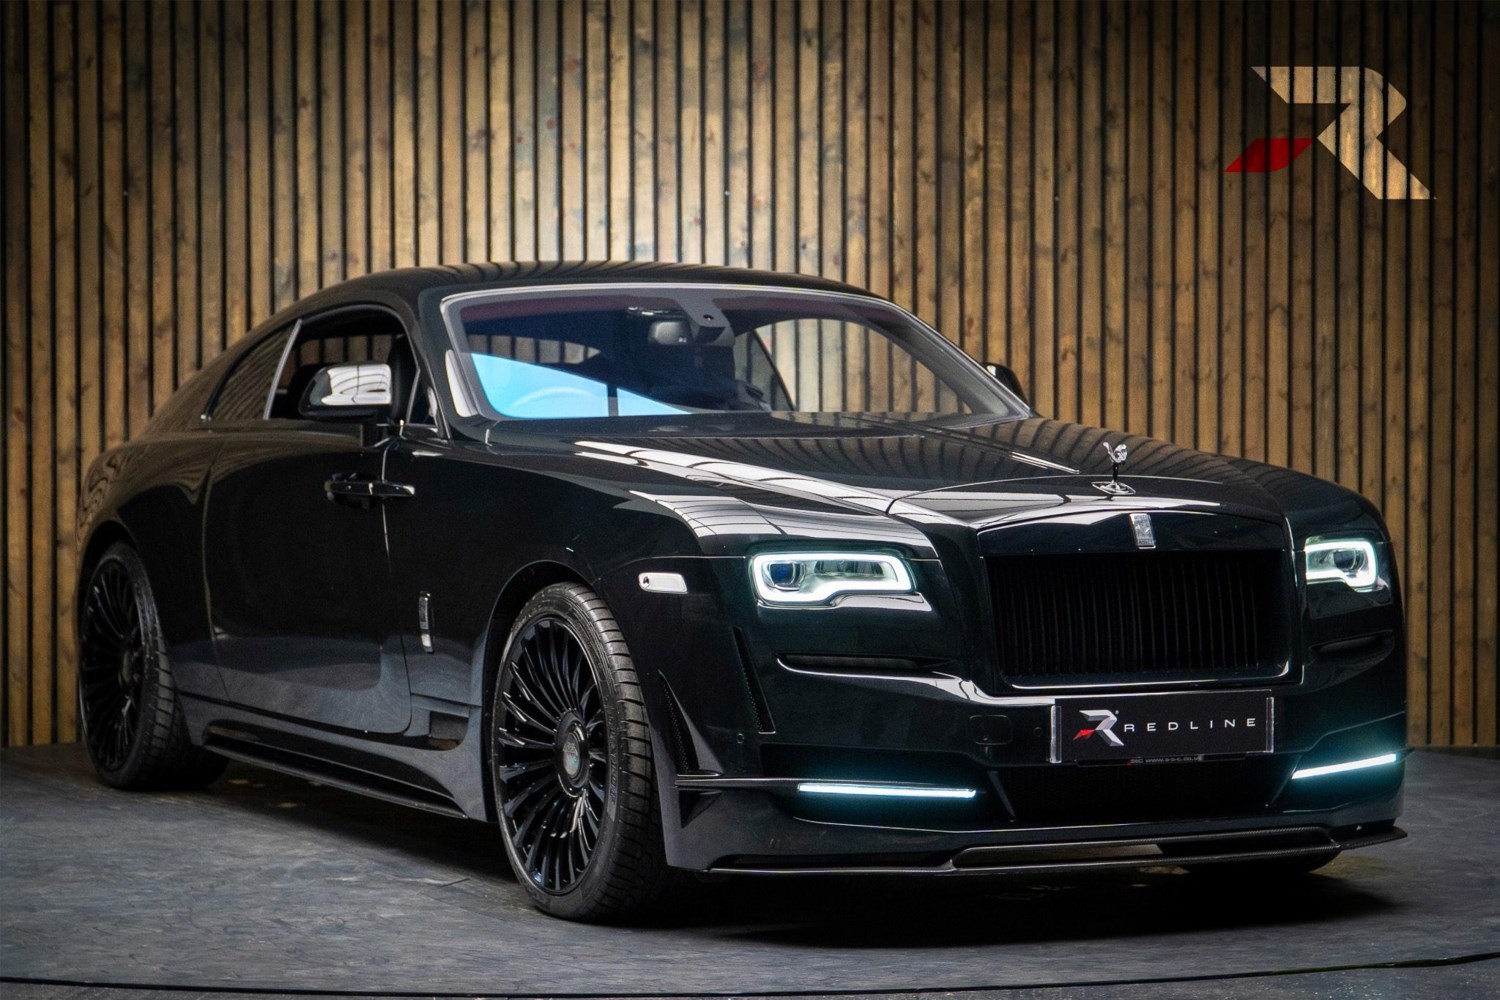 Rolls-Royce Wraith Listing Image